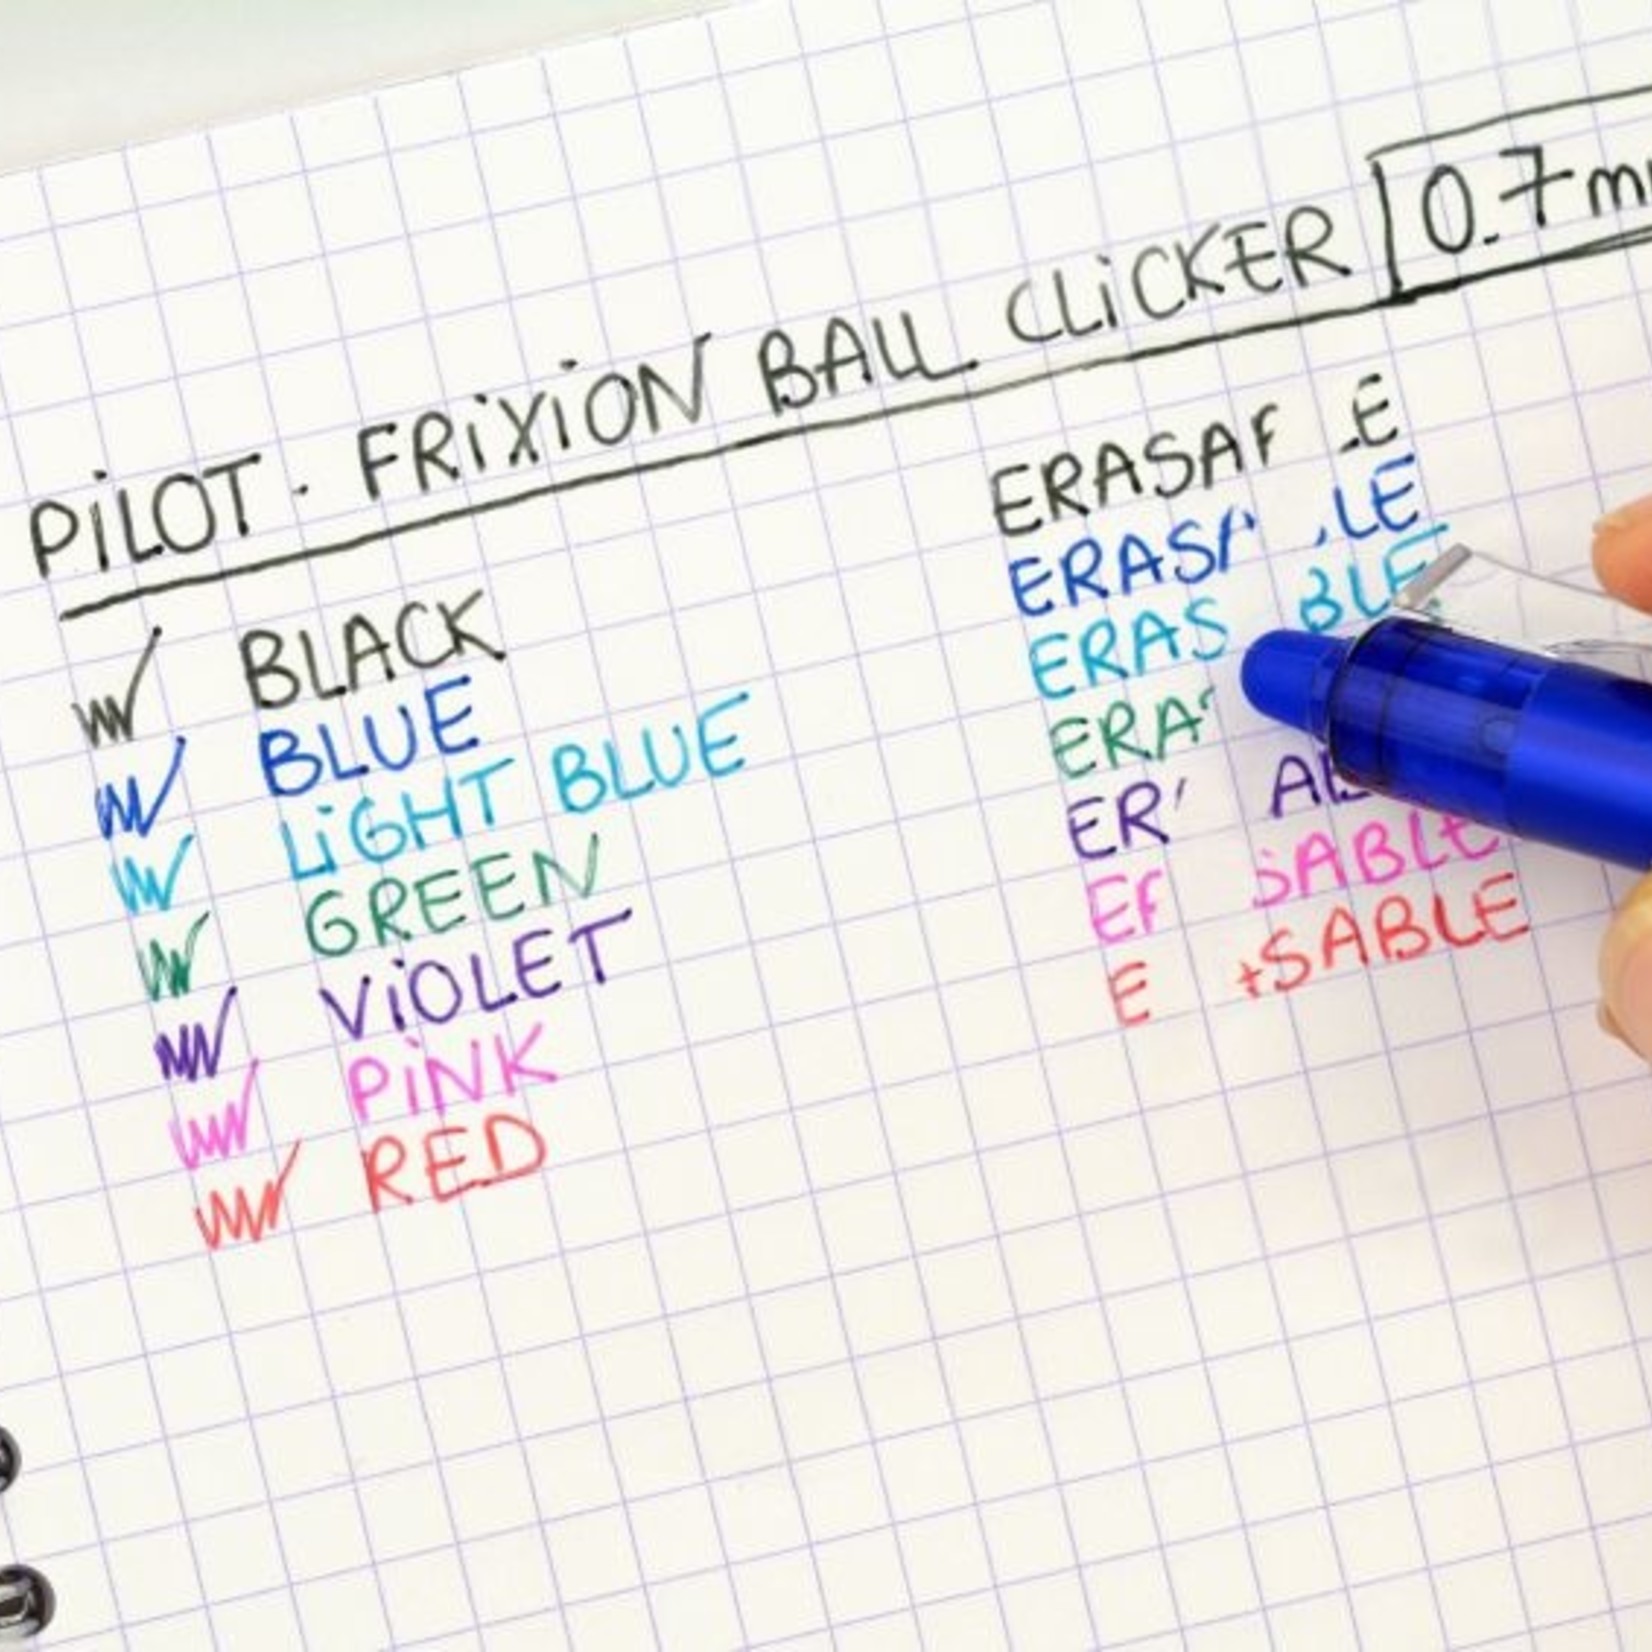 PILOT FRIXION BALL CLICKER ERASABLE INK PEN FINE 0.7MM RED